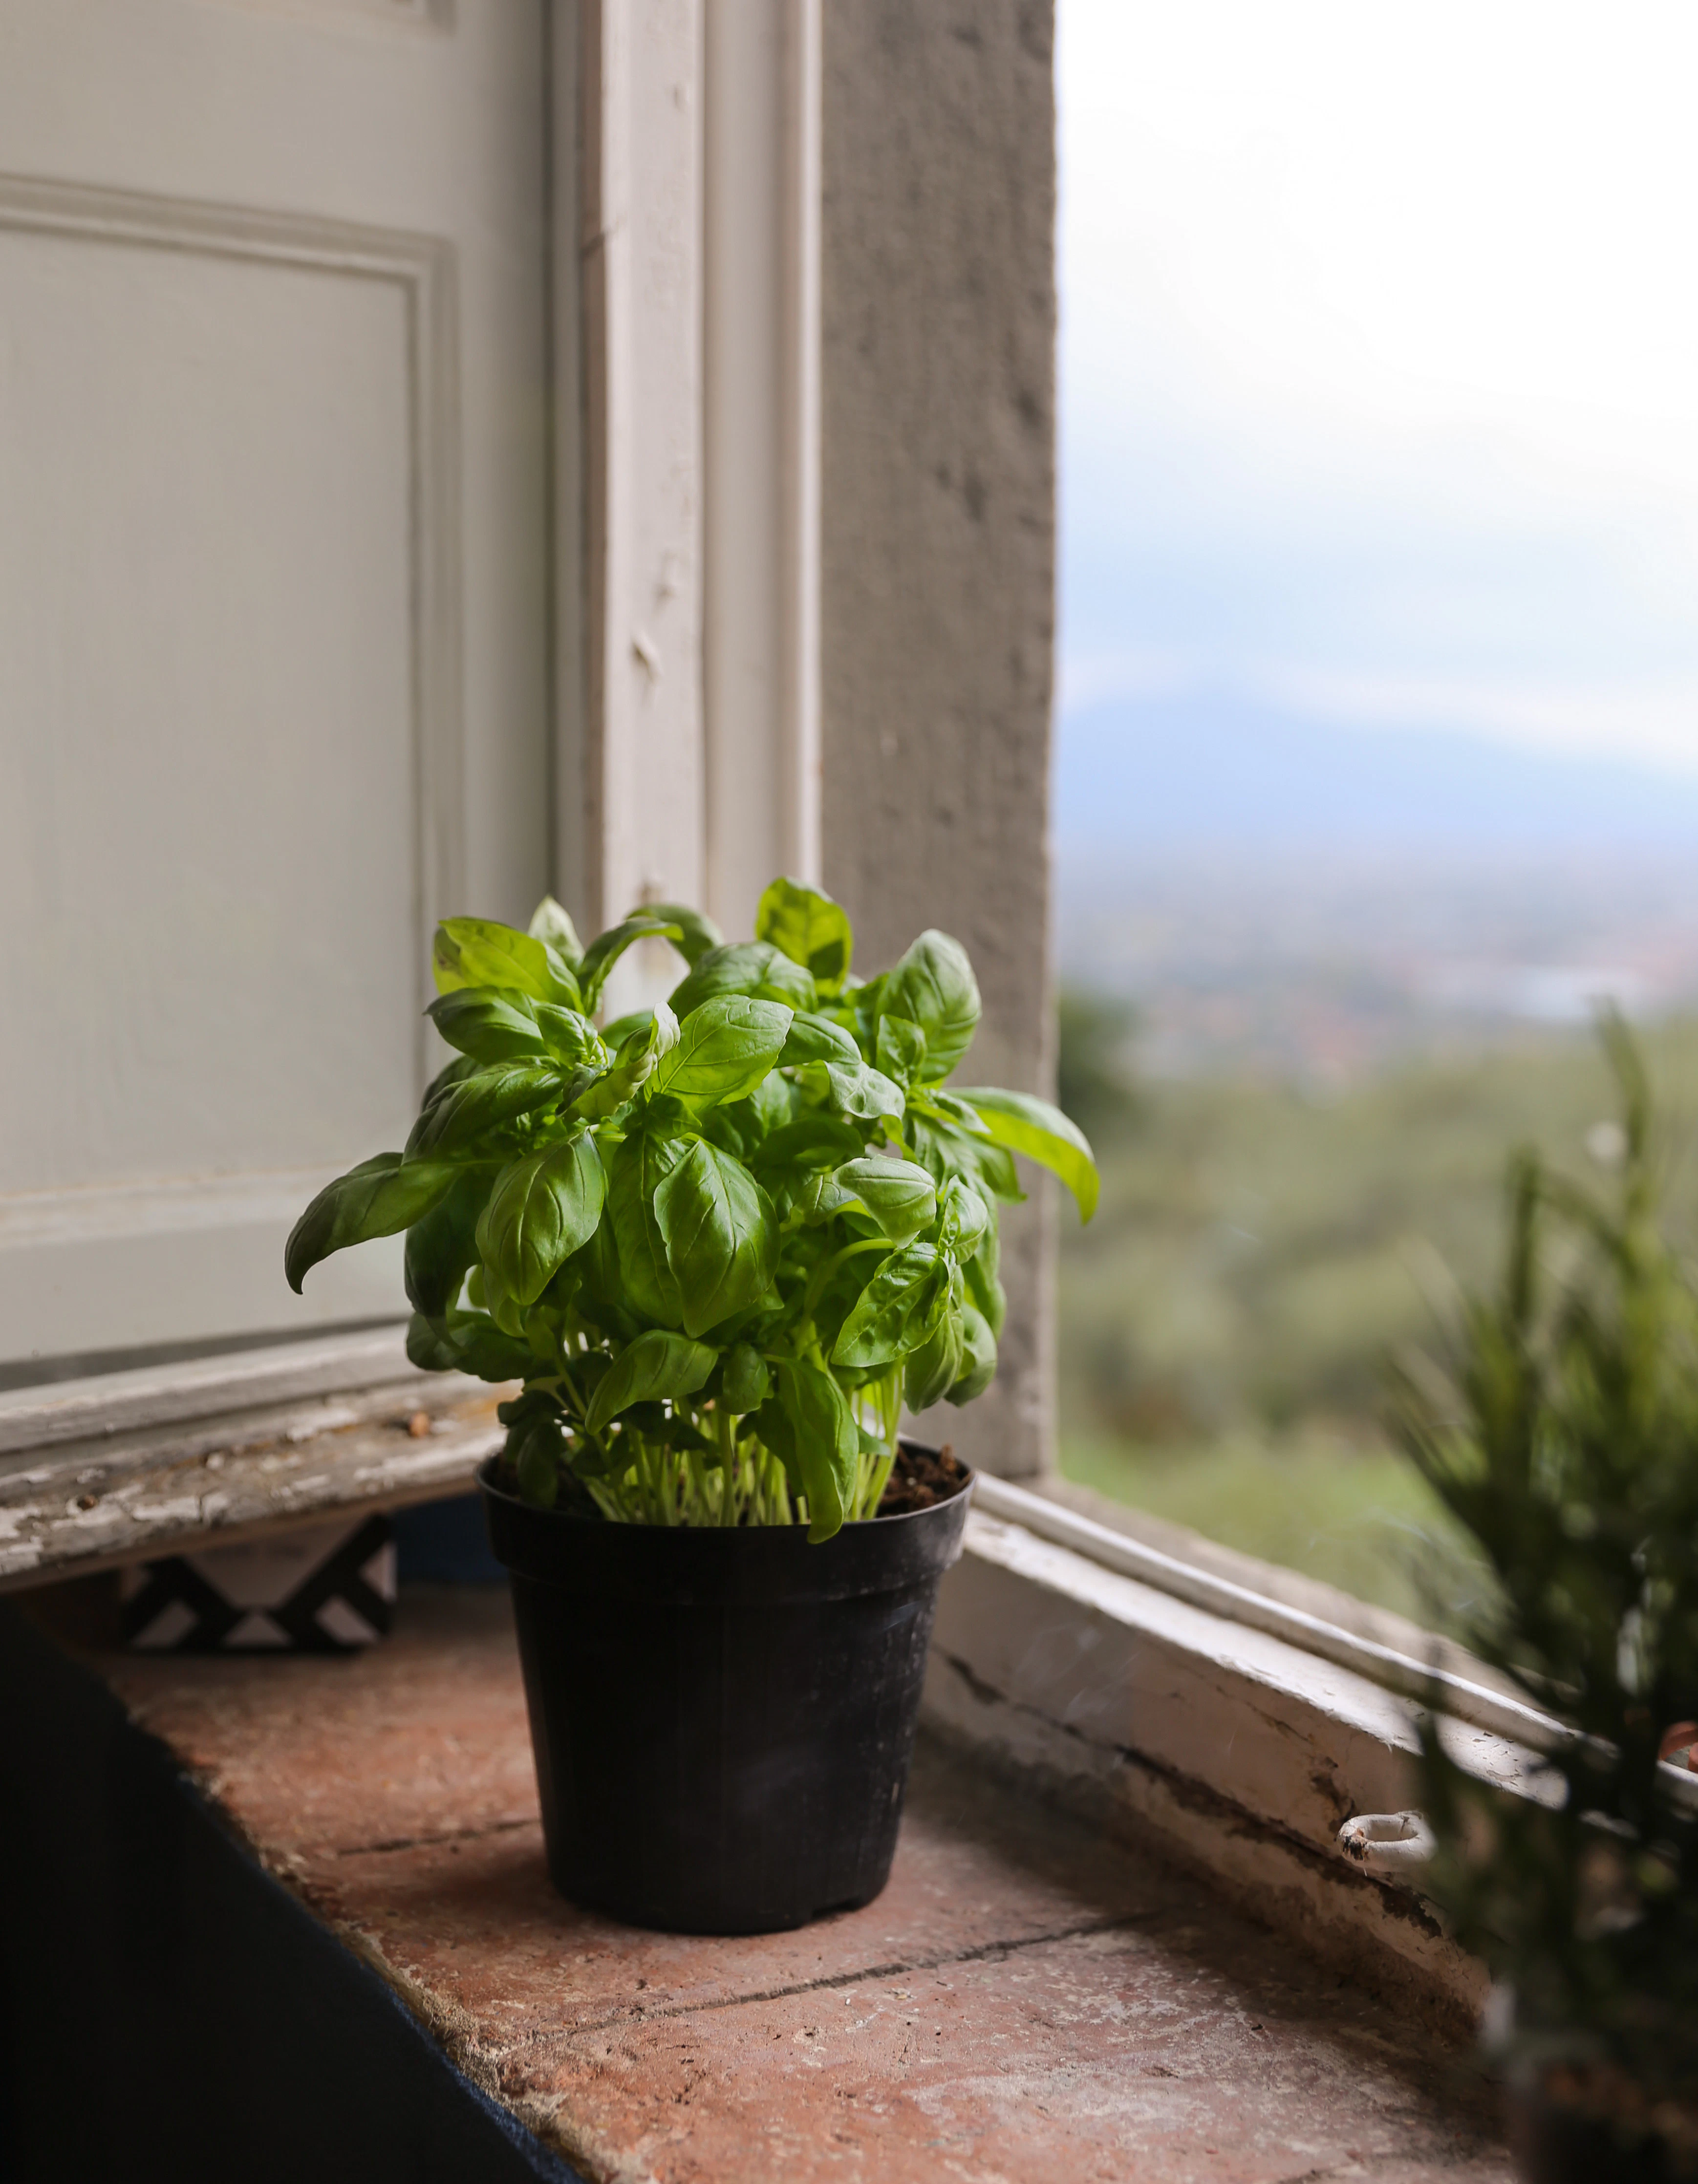 A pot of basil sits on the windowsill of an open window.